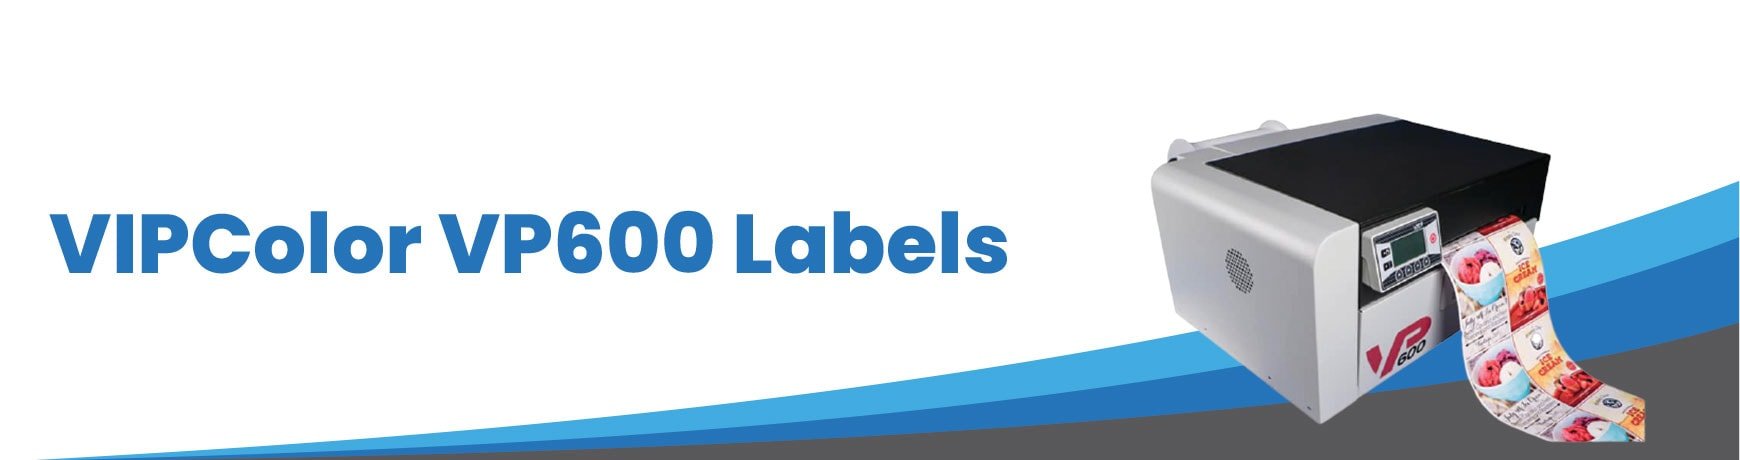 VIPColor VP600 Labels